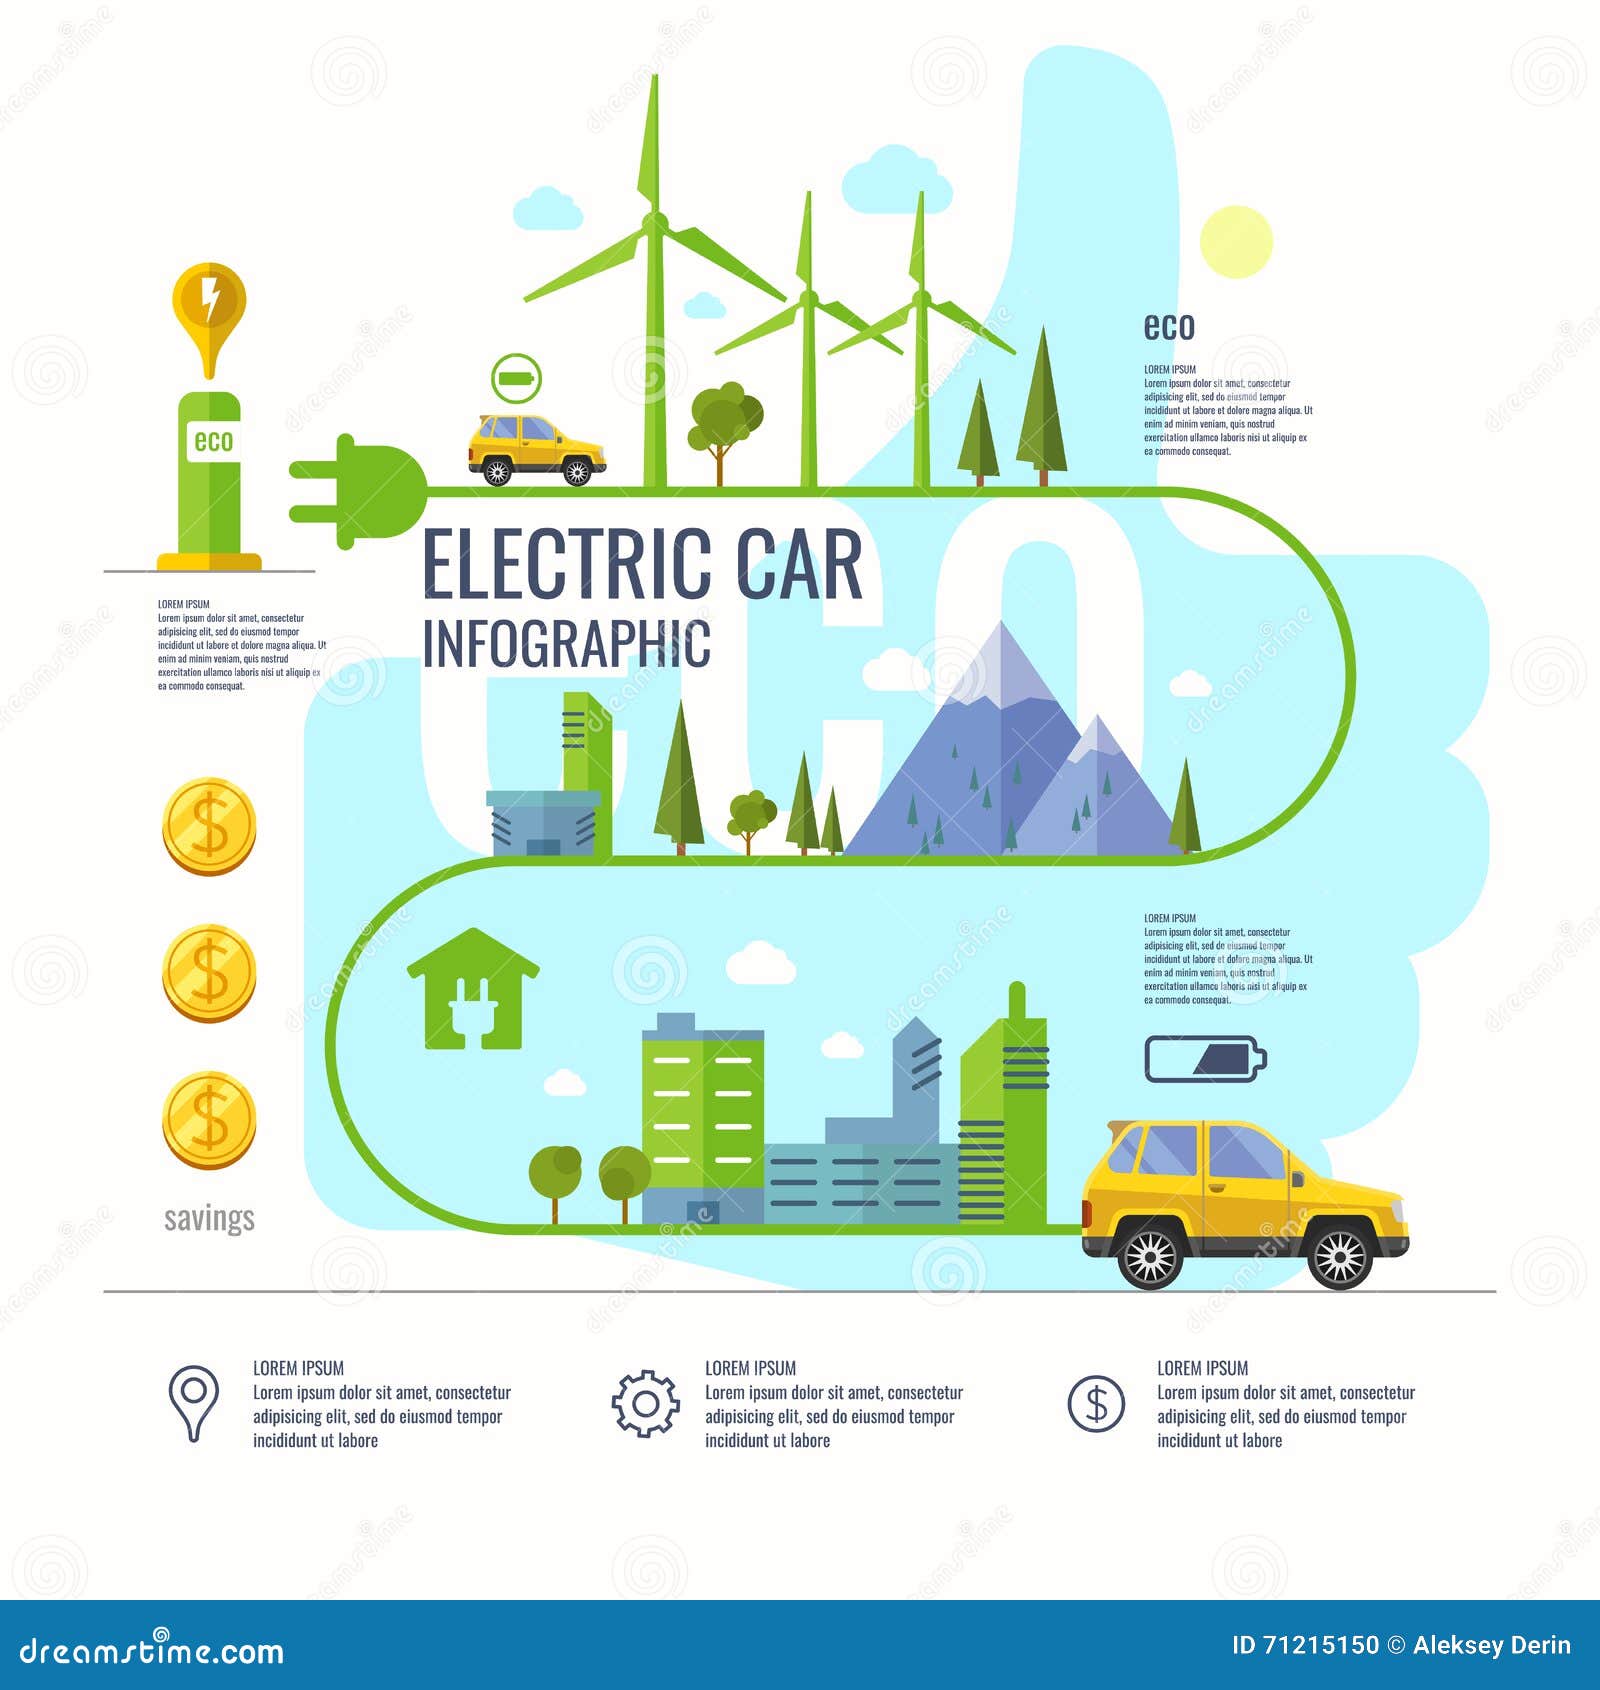 Electric cars vs gas cars speech essay